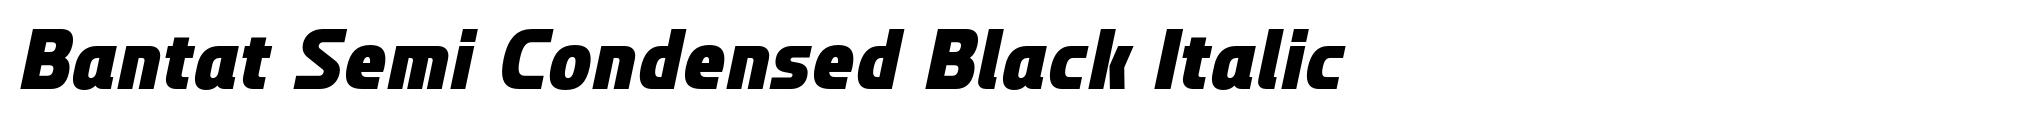 Bantat Semi Condensed Black Italic image